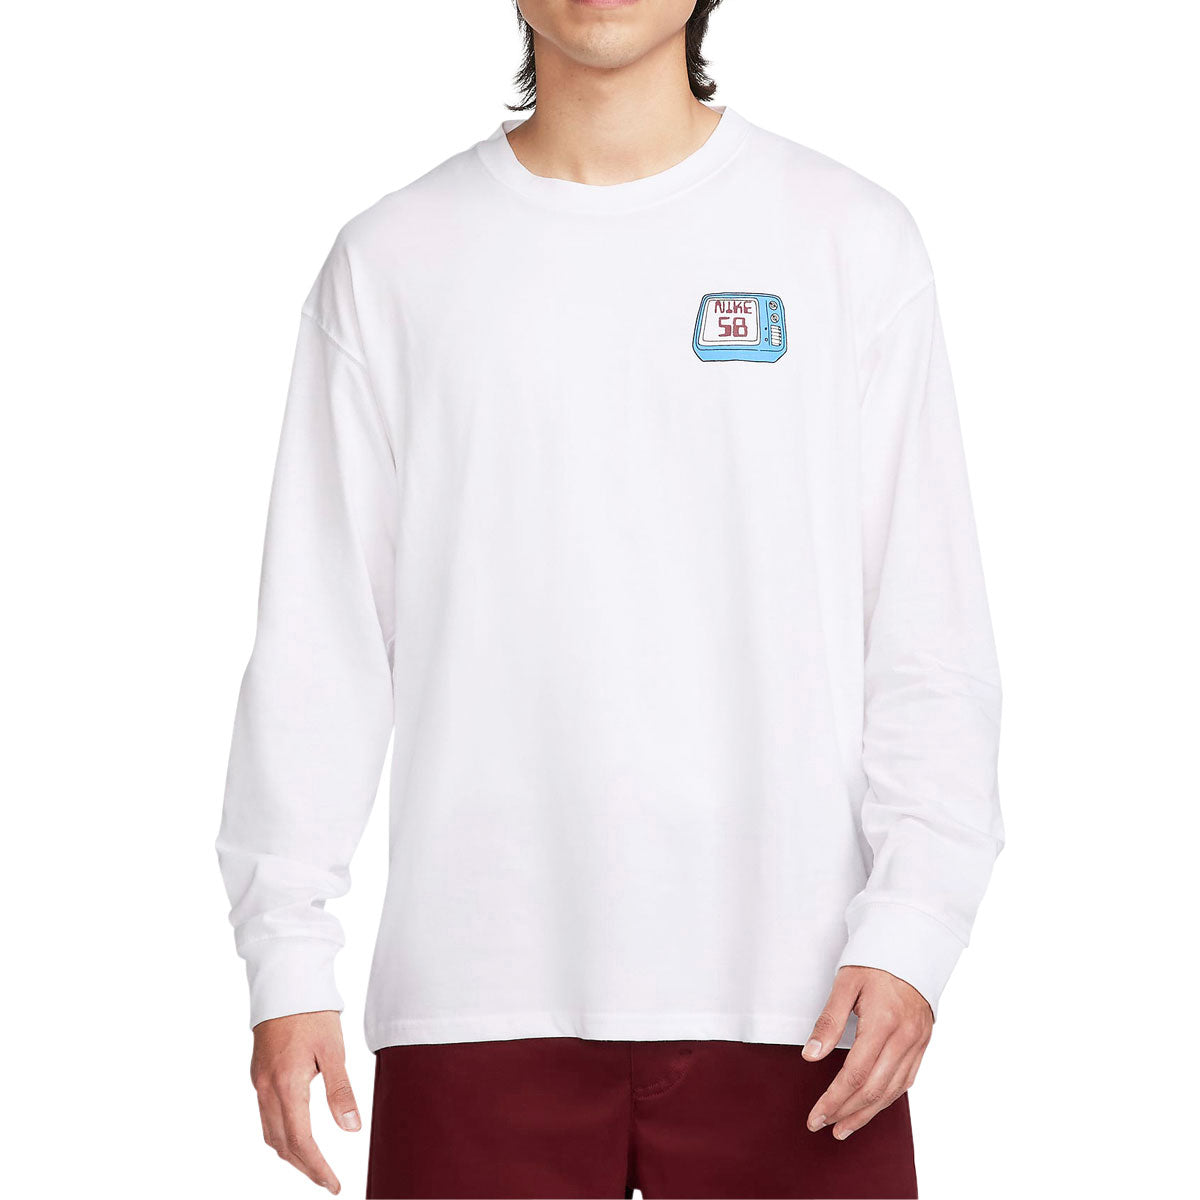 Nike SB TV Long Sleeve T-Shirt - White image 3